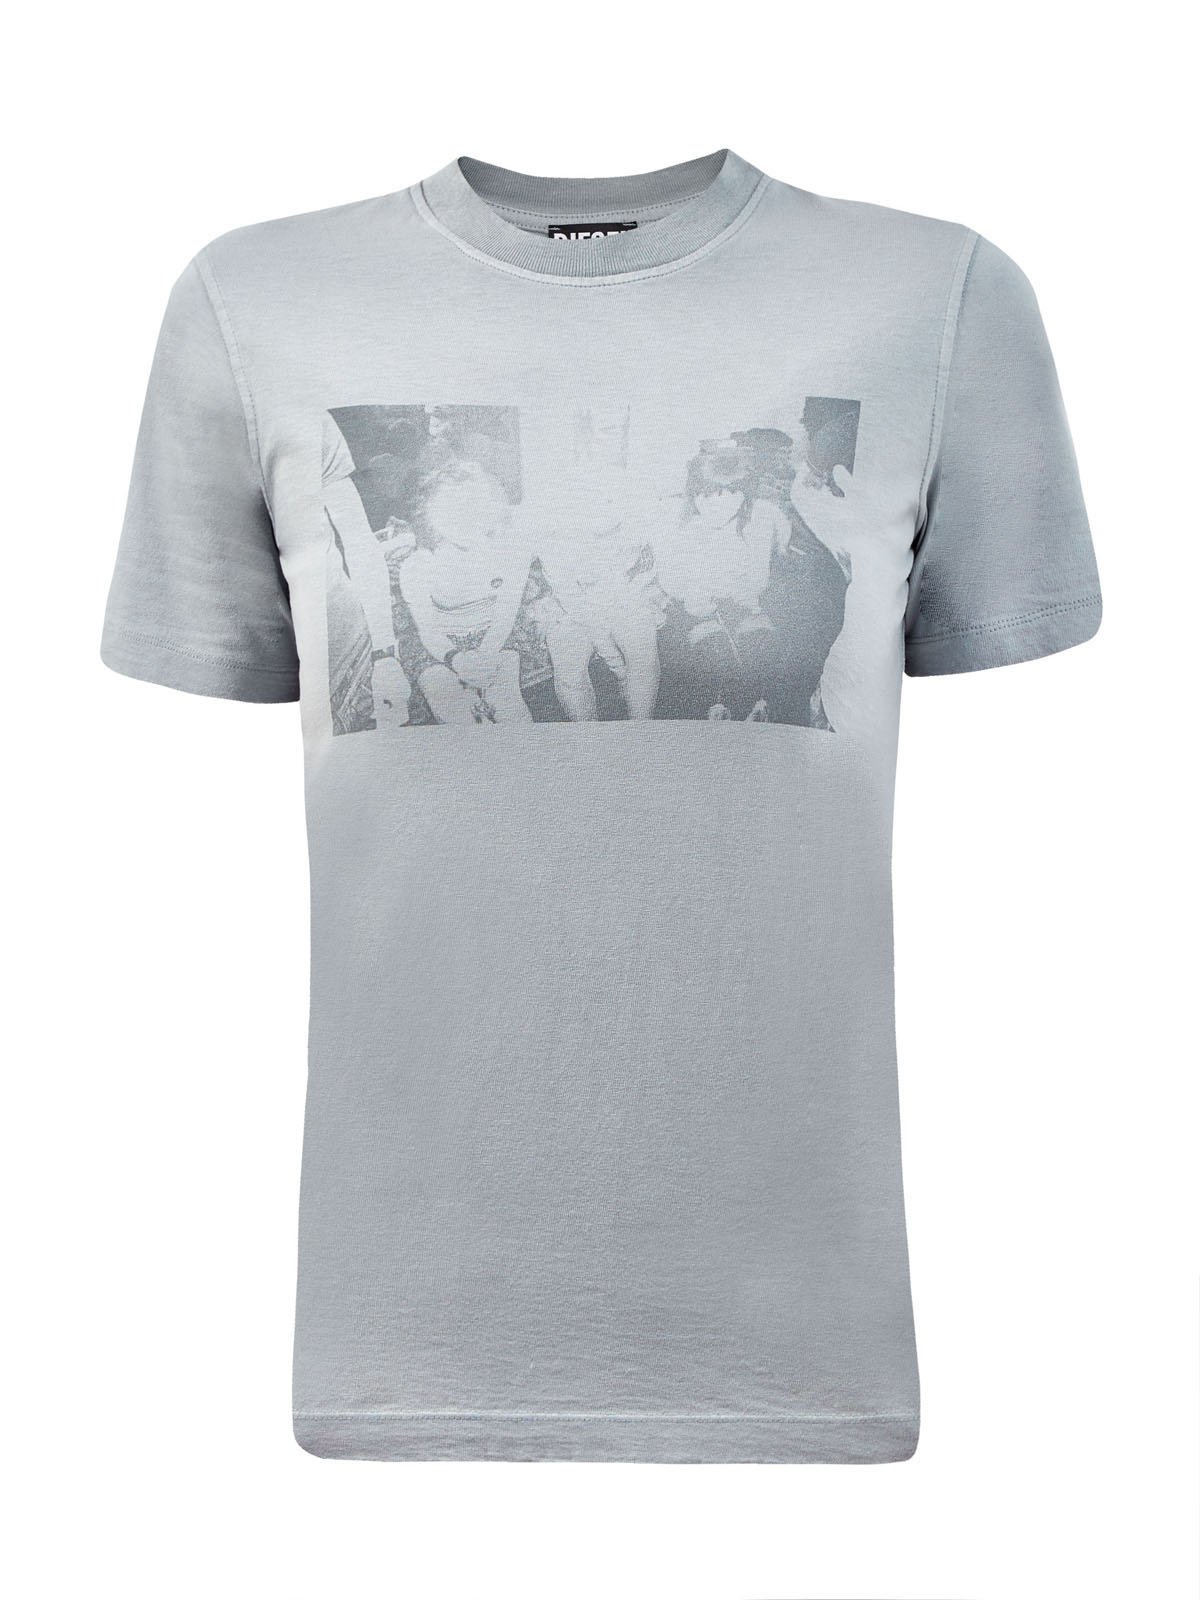 Хлопковая футболка T-Reg из джерси с цифровым принтом DIESEL, цвет серый, размер S;M;L;XL